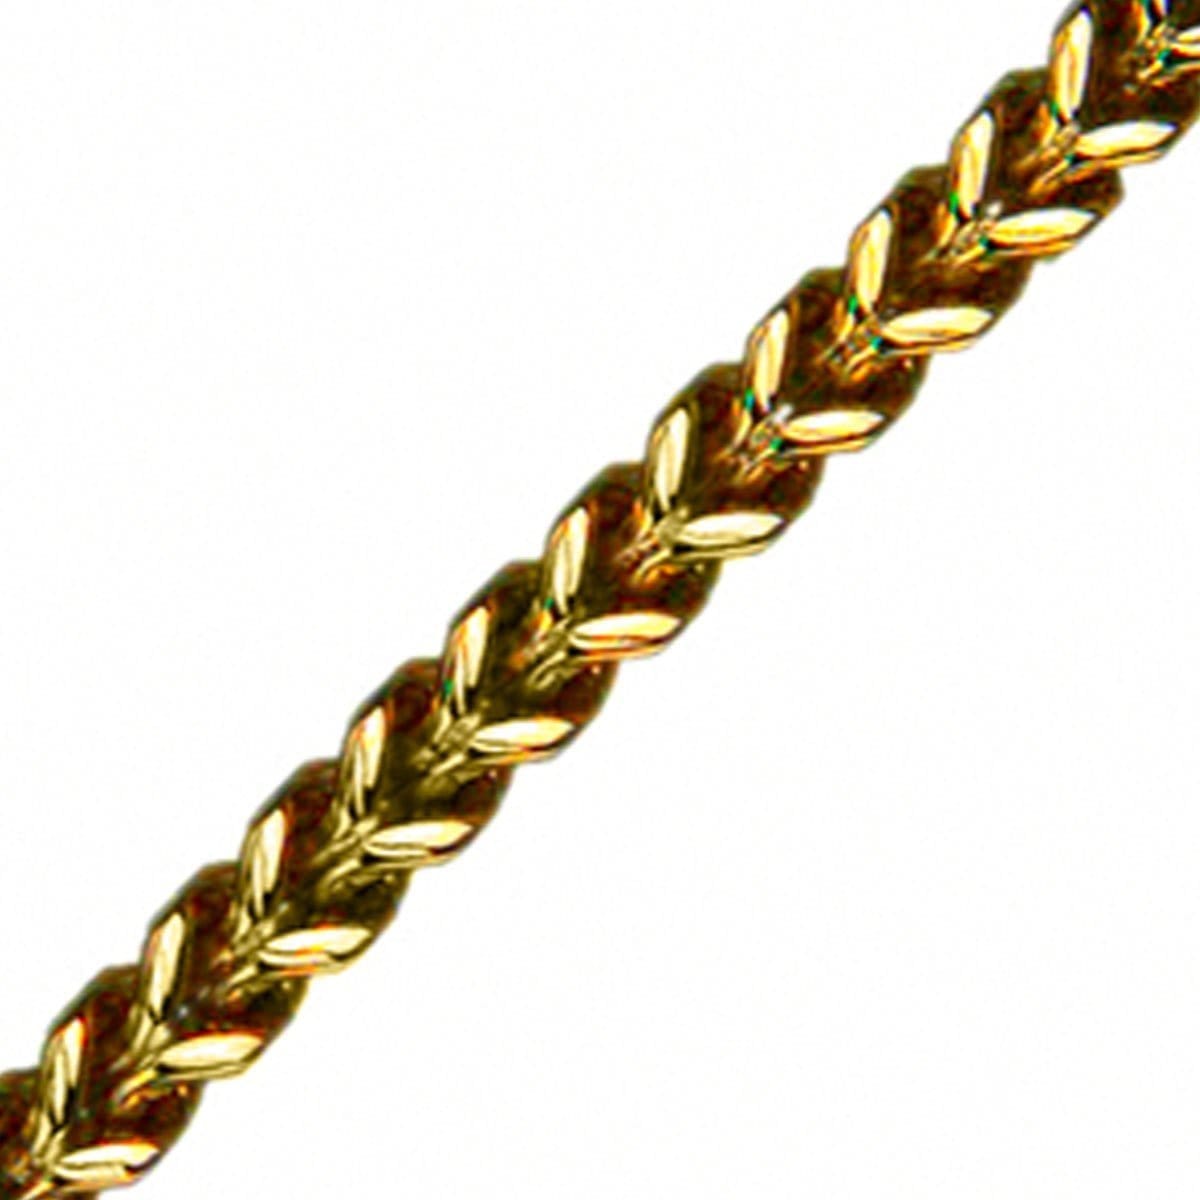 INOX JEWELRY Bracelets Golden Tone Stainless Steel Classic Franco Chain Bracelet BR750G